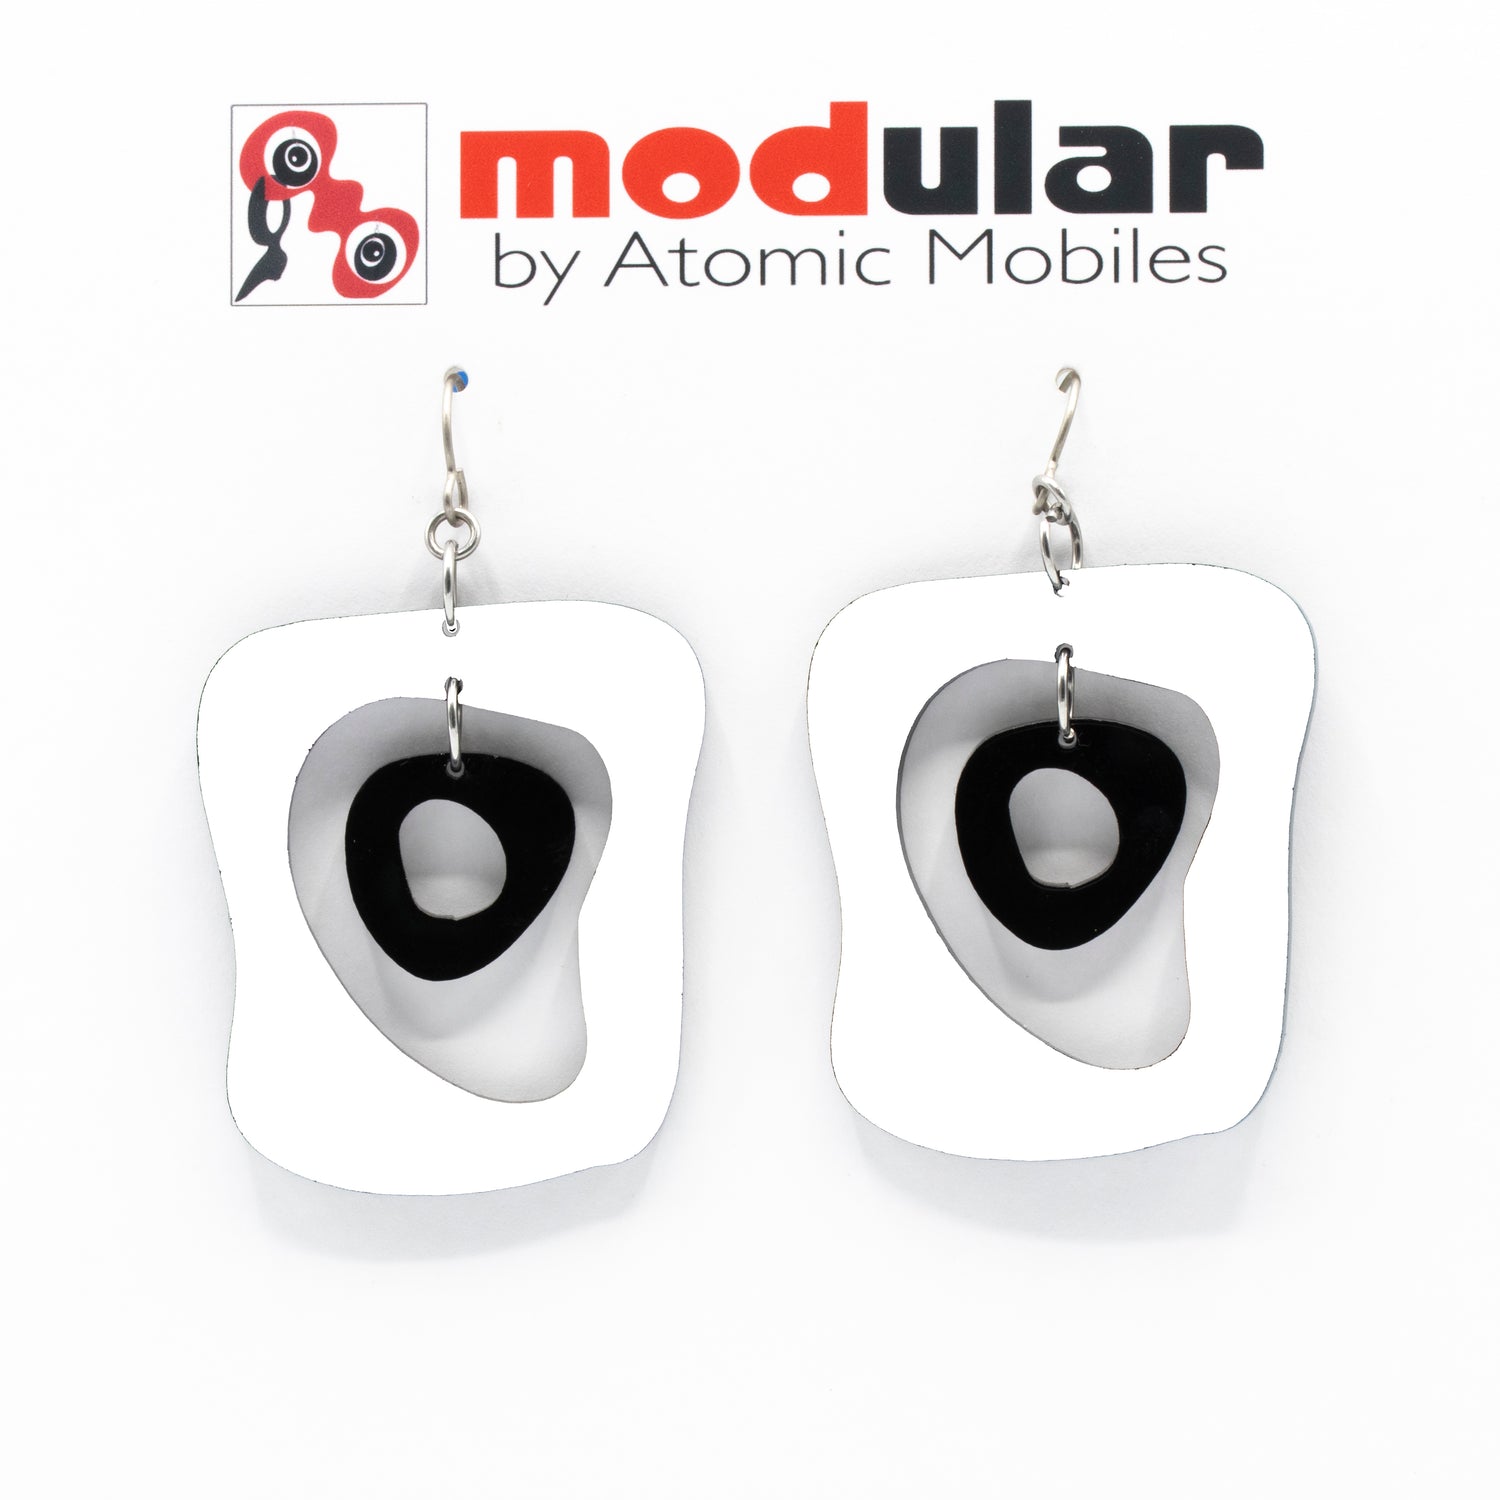 MODular Earrings - Mid Mod Statement Earrings in White and Black by AtomicMobiles.com - mid century inspired modern art dangle earrings